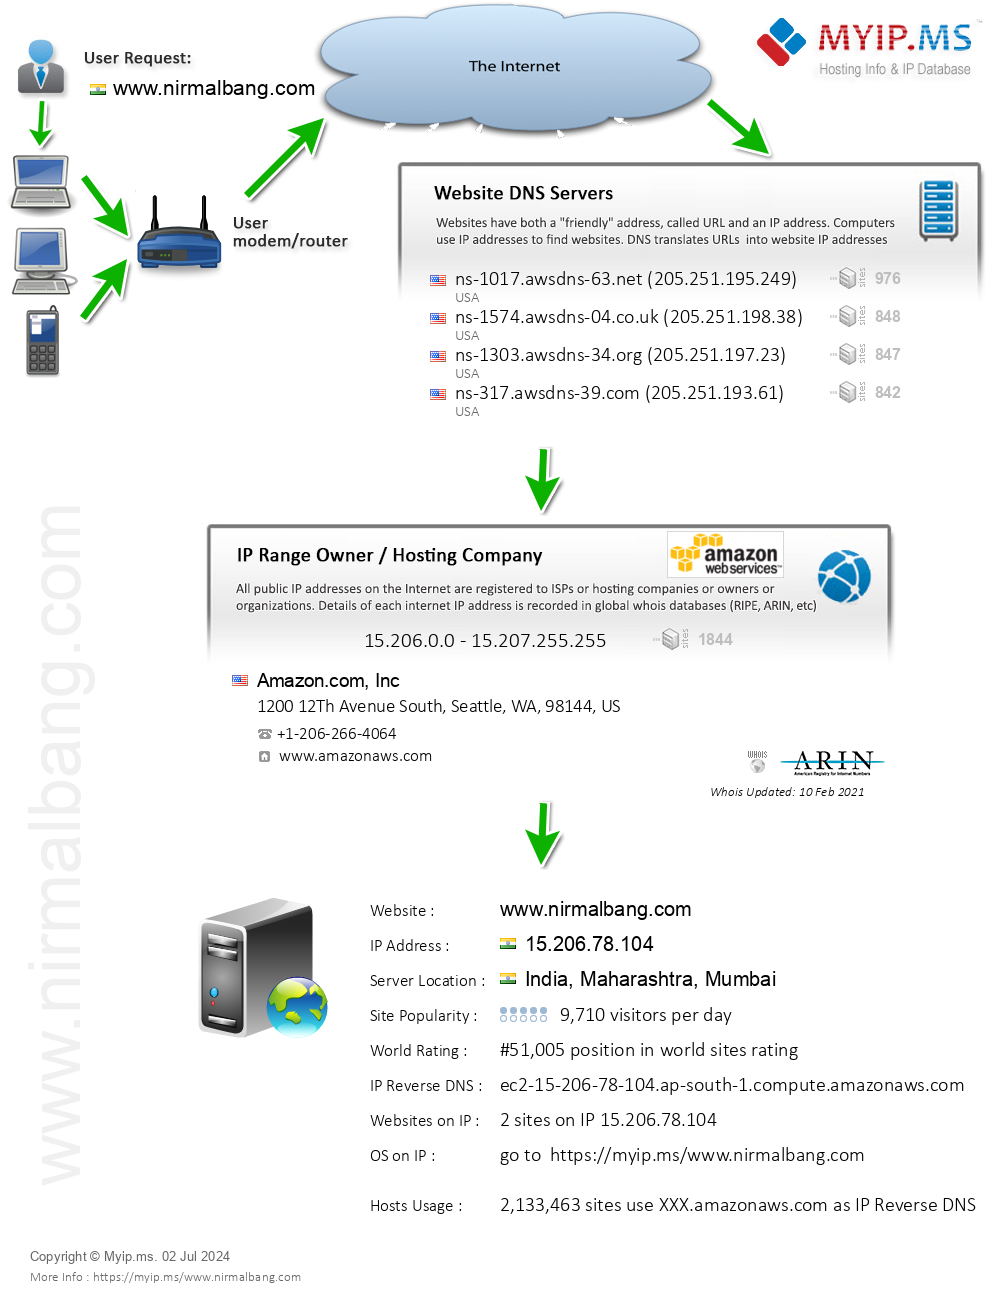 Nirmalbang.com - Website Hosting Visual IP Diagram